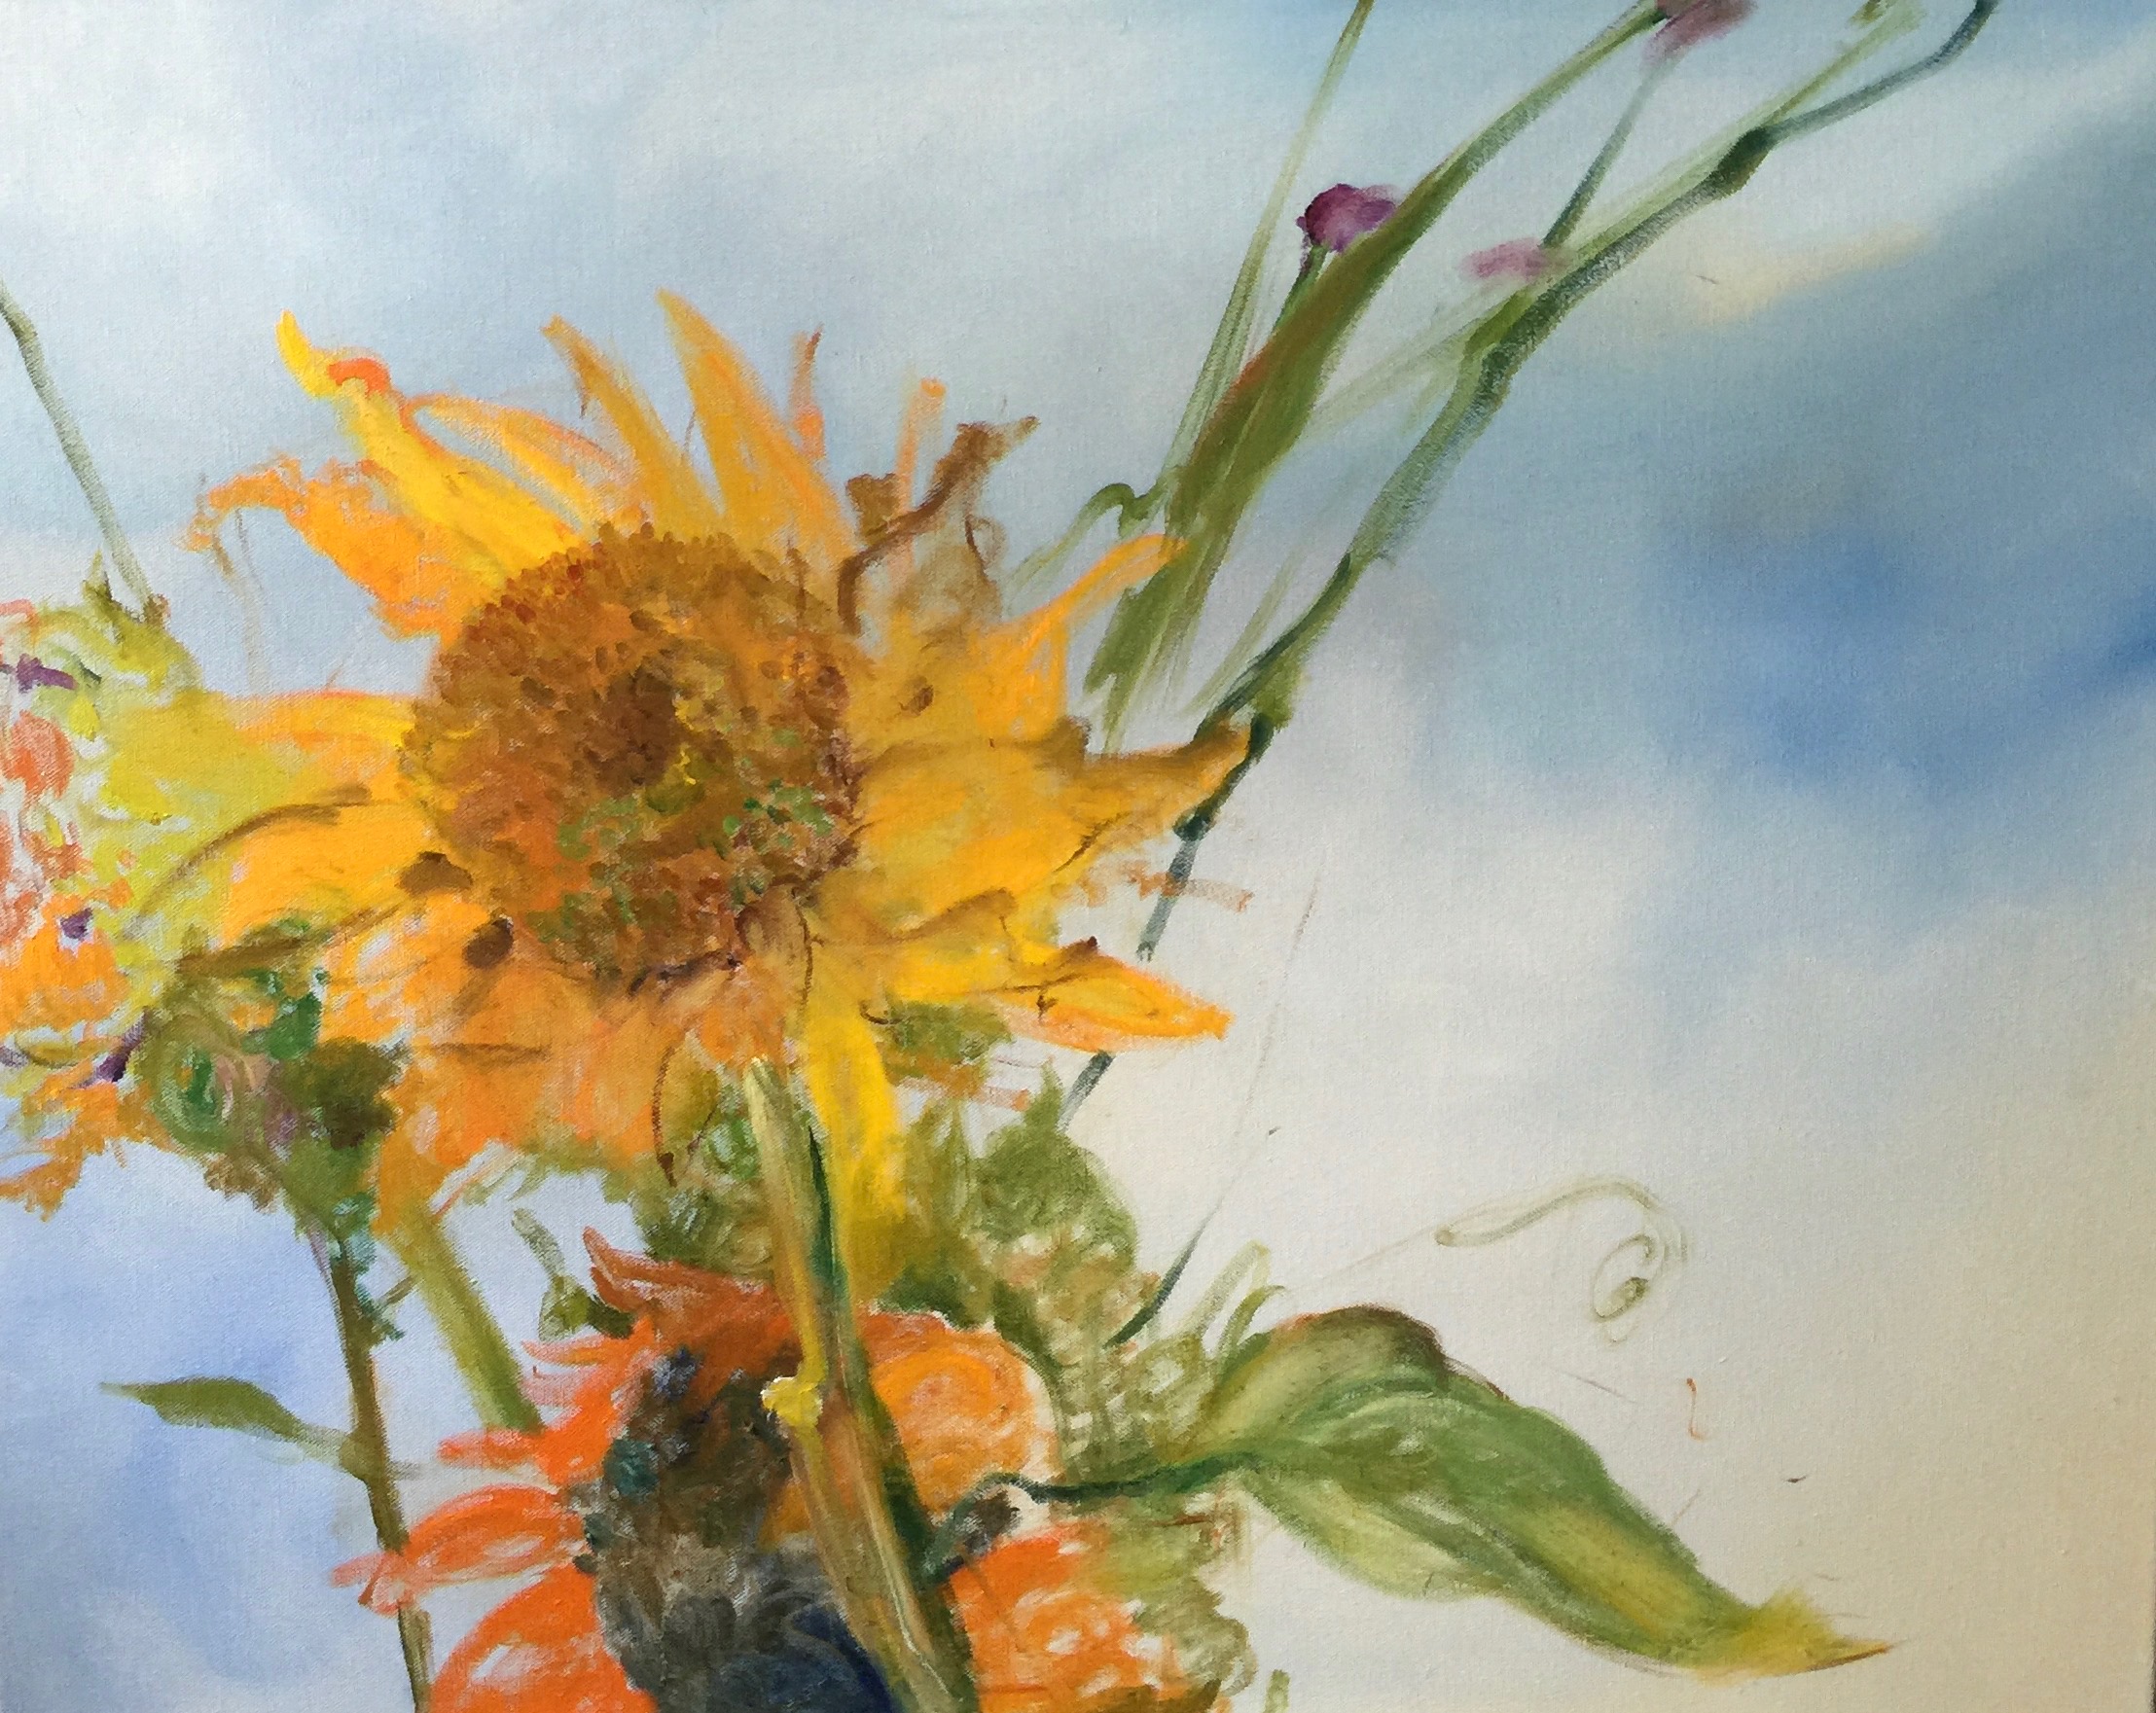  005 'Sunflowers' Oil on Canvas